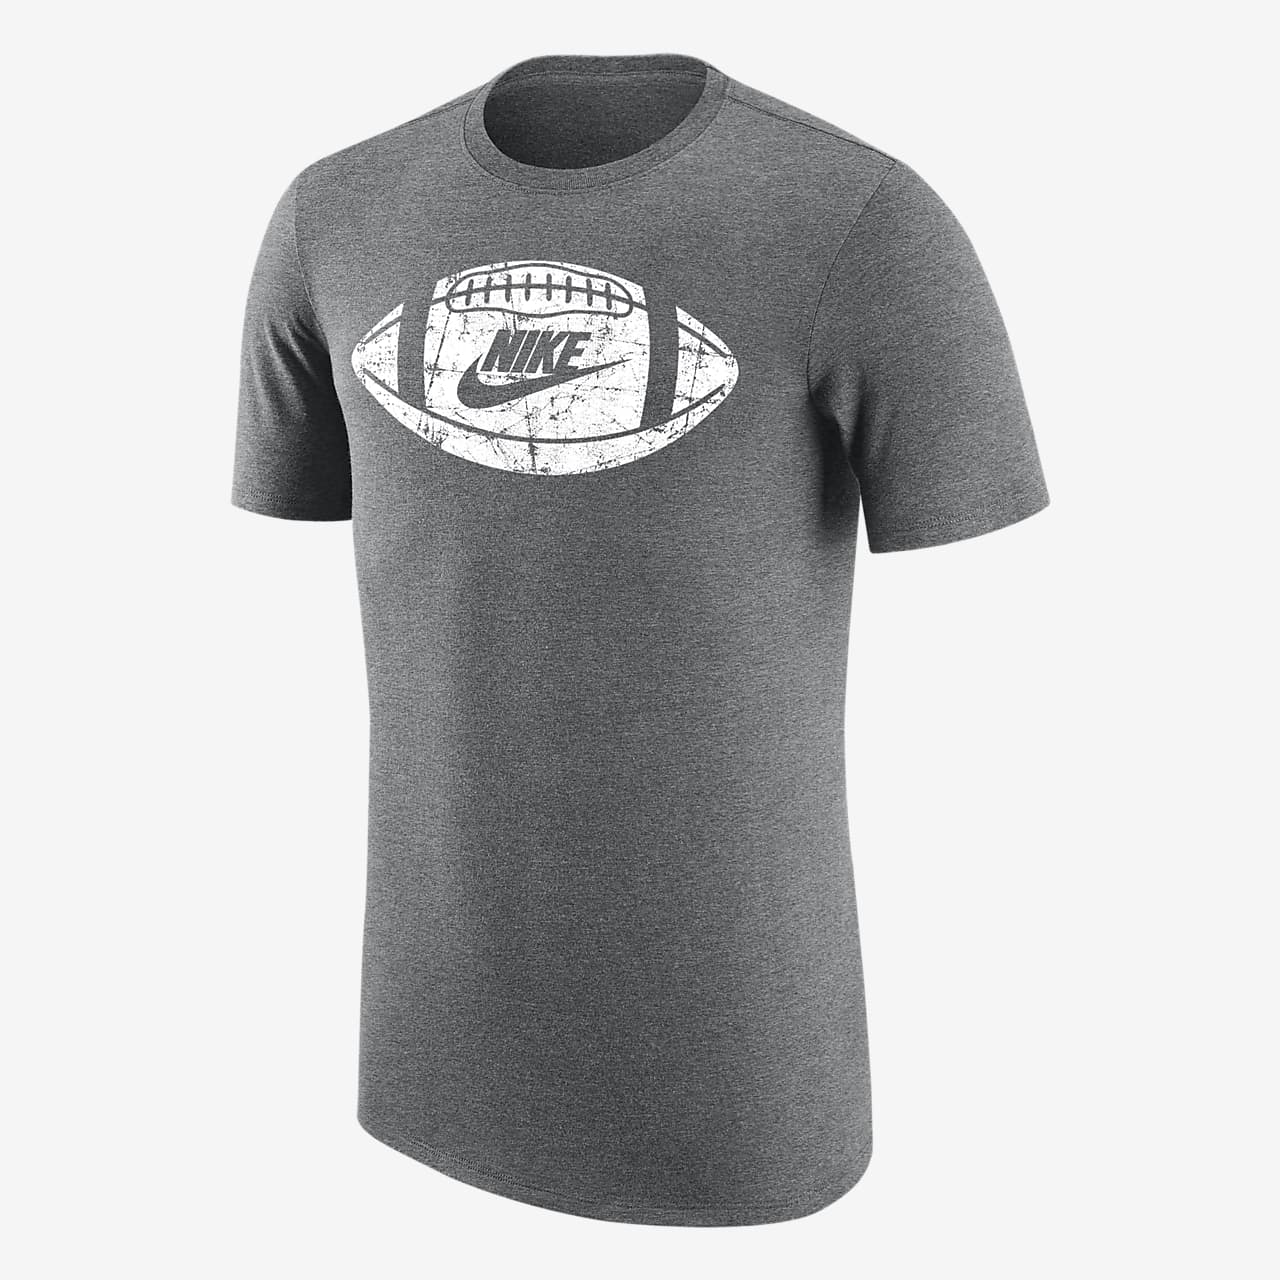 Magtfulde udgifterne propel Nike Sportswear Men's Vintage Football T-Shirt. Nike.com